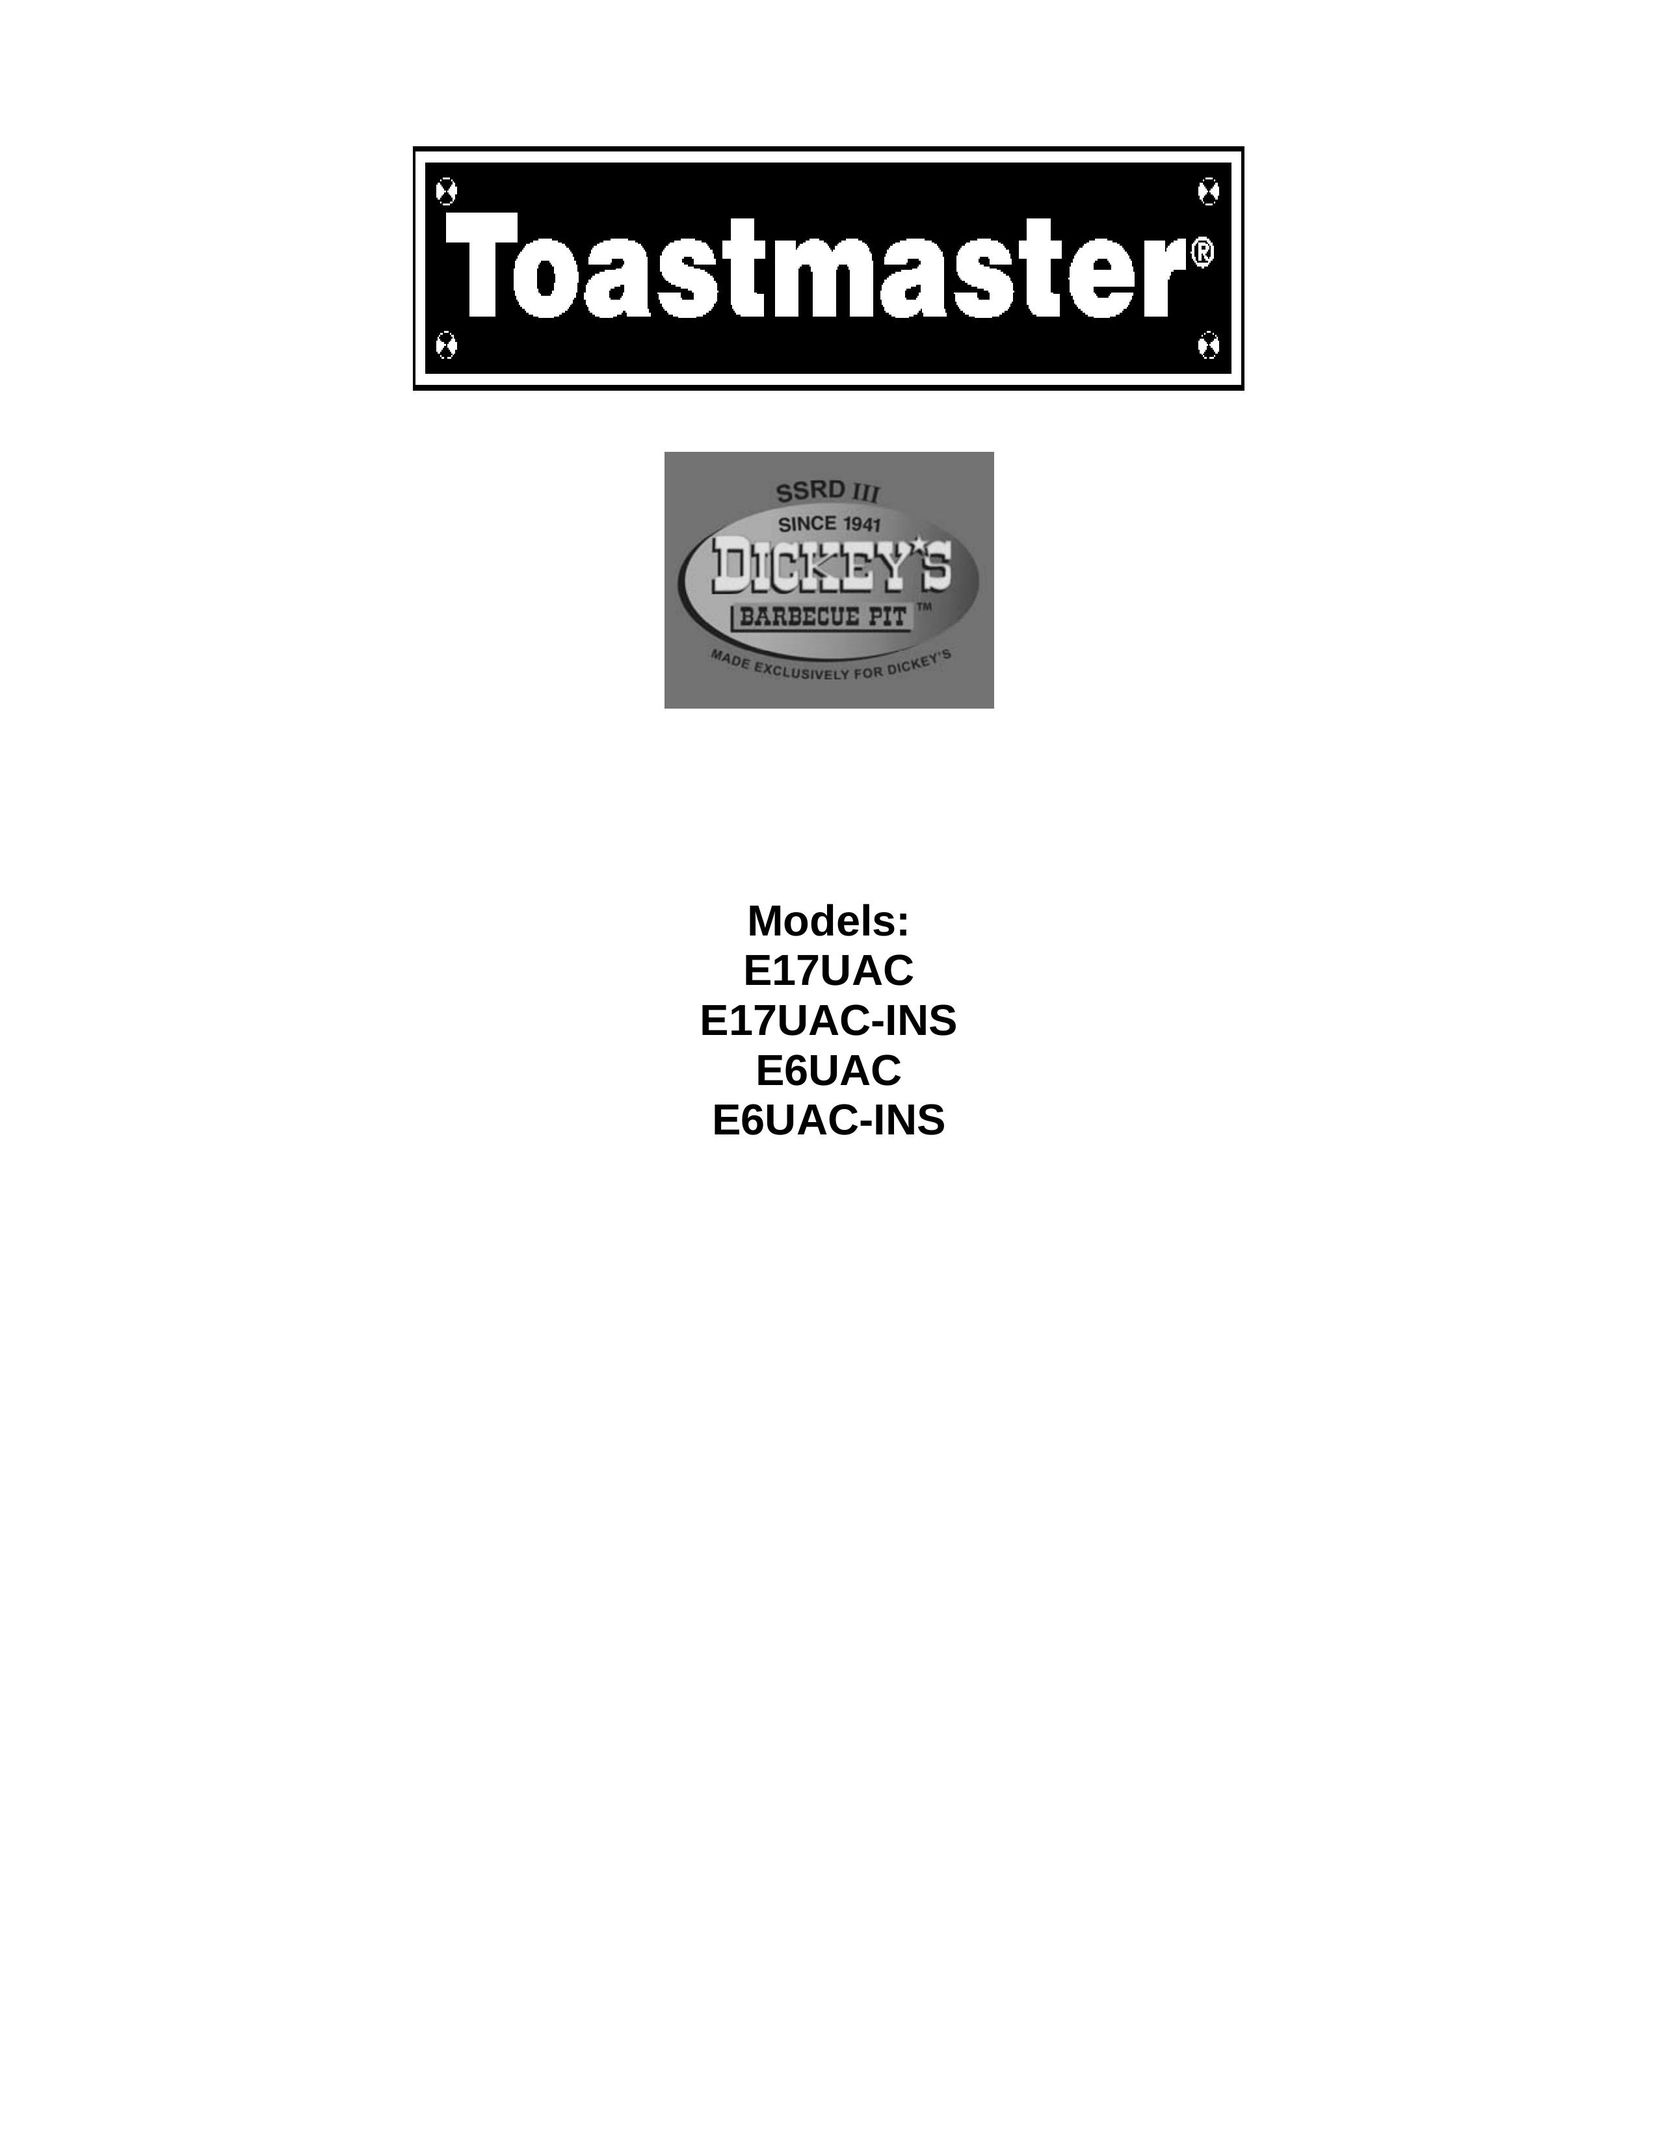 Toastmaster E17UAC Food Warmer User Manual